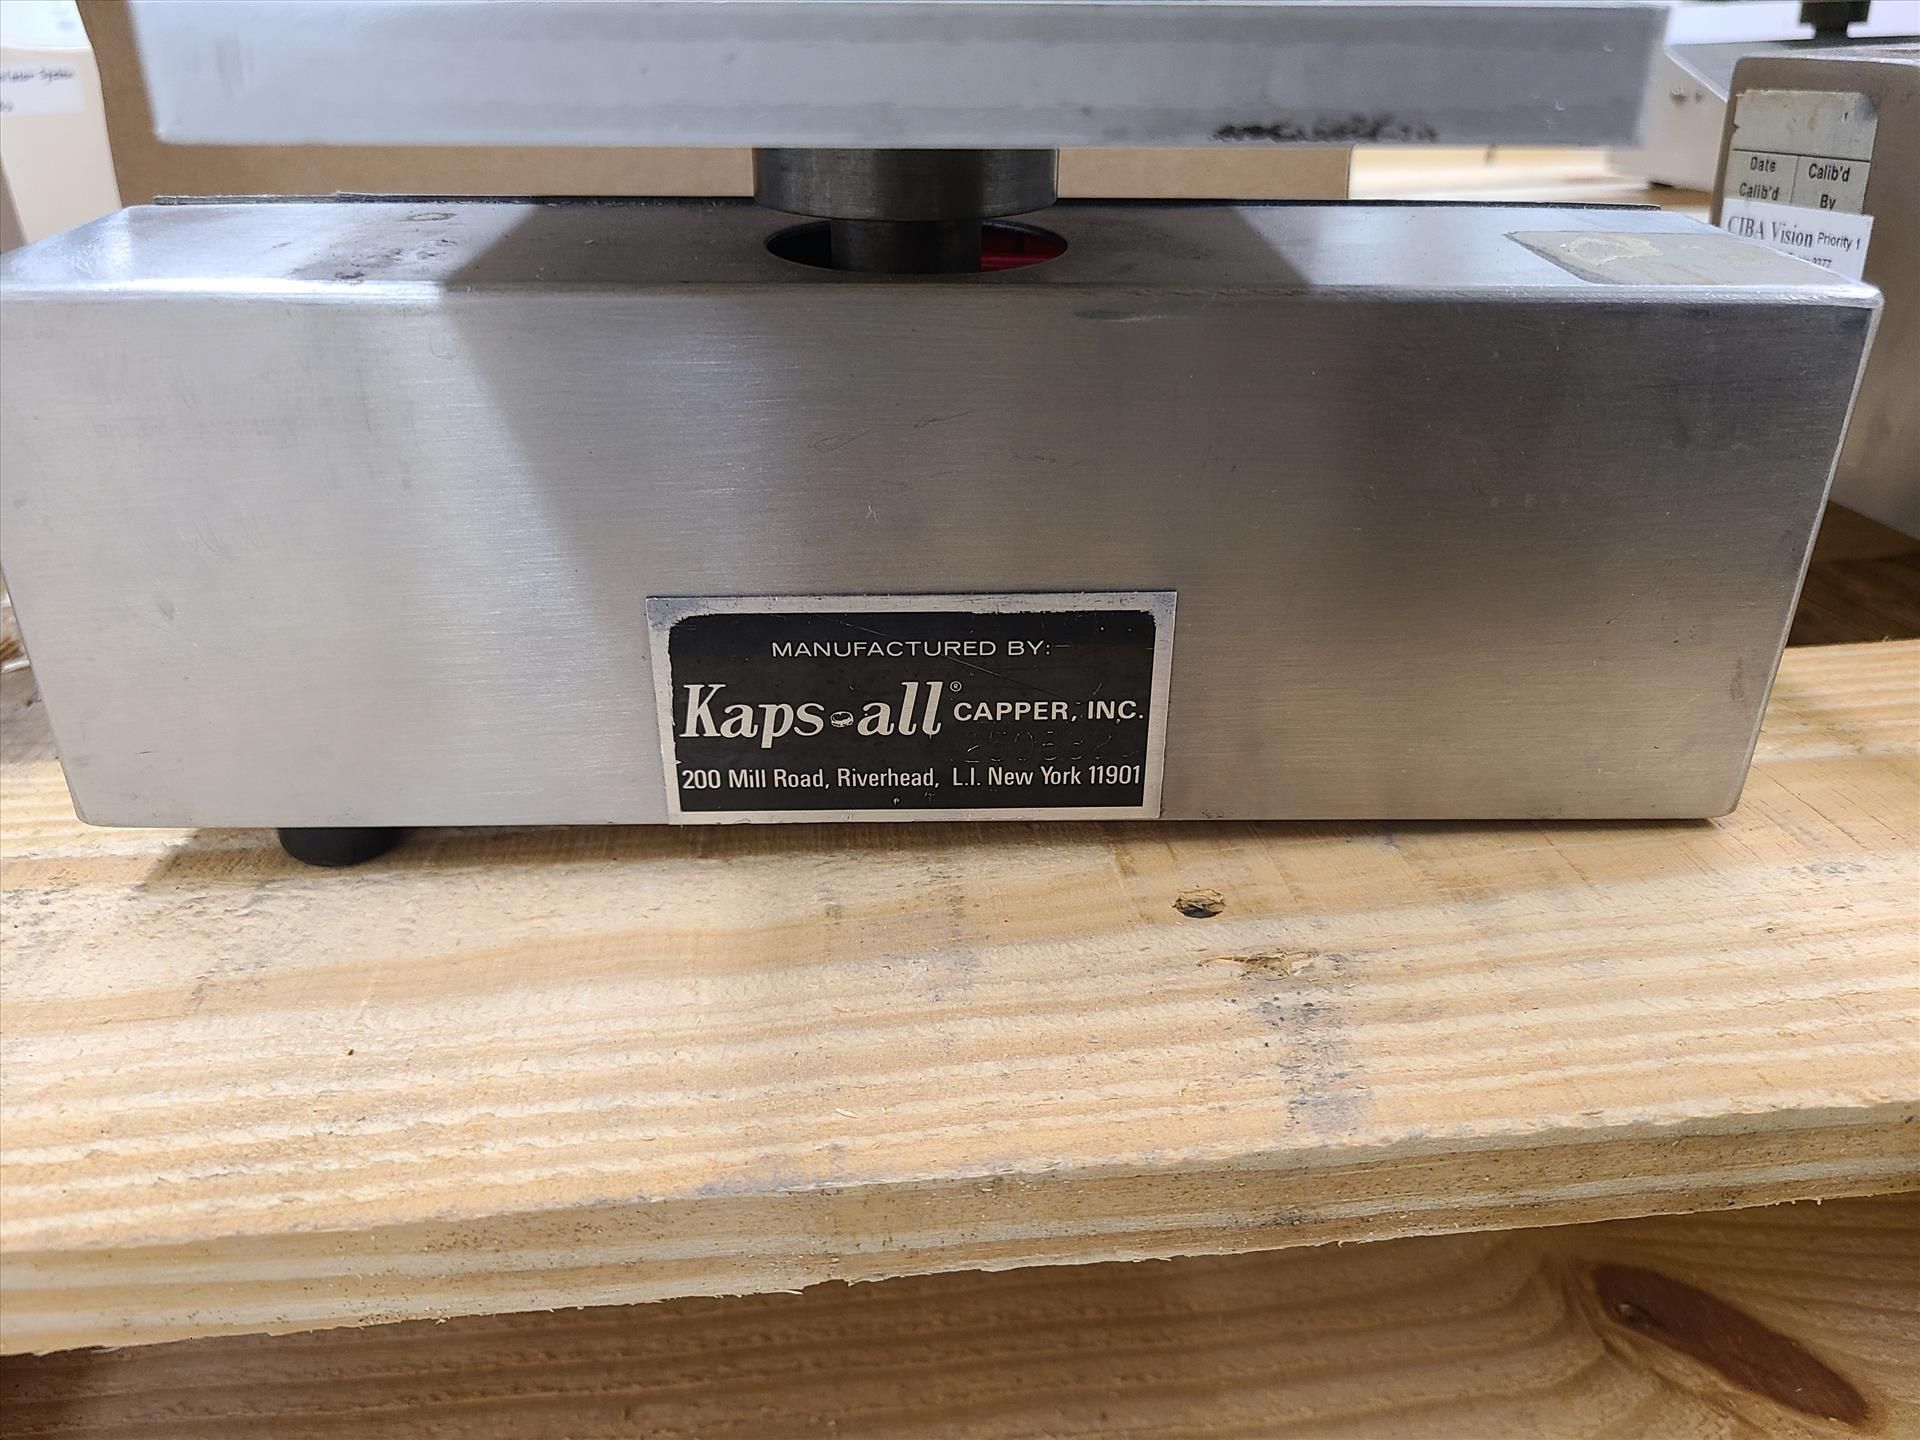 Kaps-all capper electronic torque tester, mod. EB 250, ser. no. 2508820 - Image 2 of 2